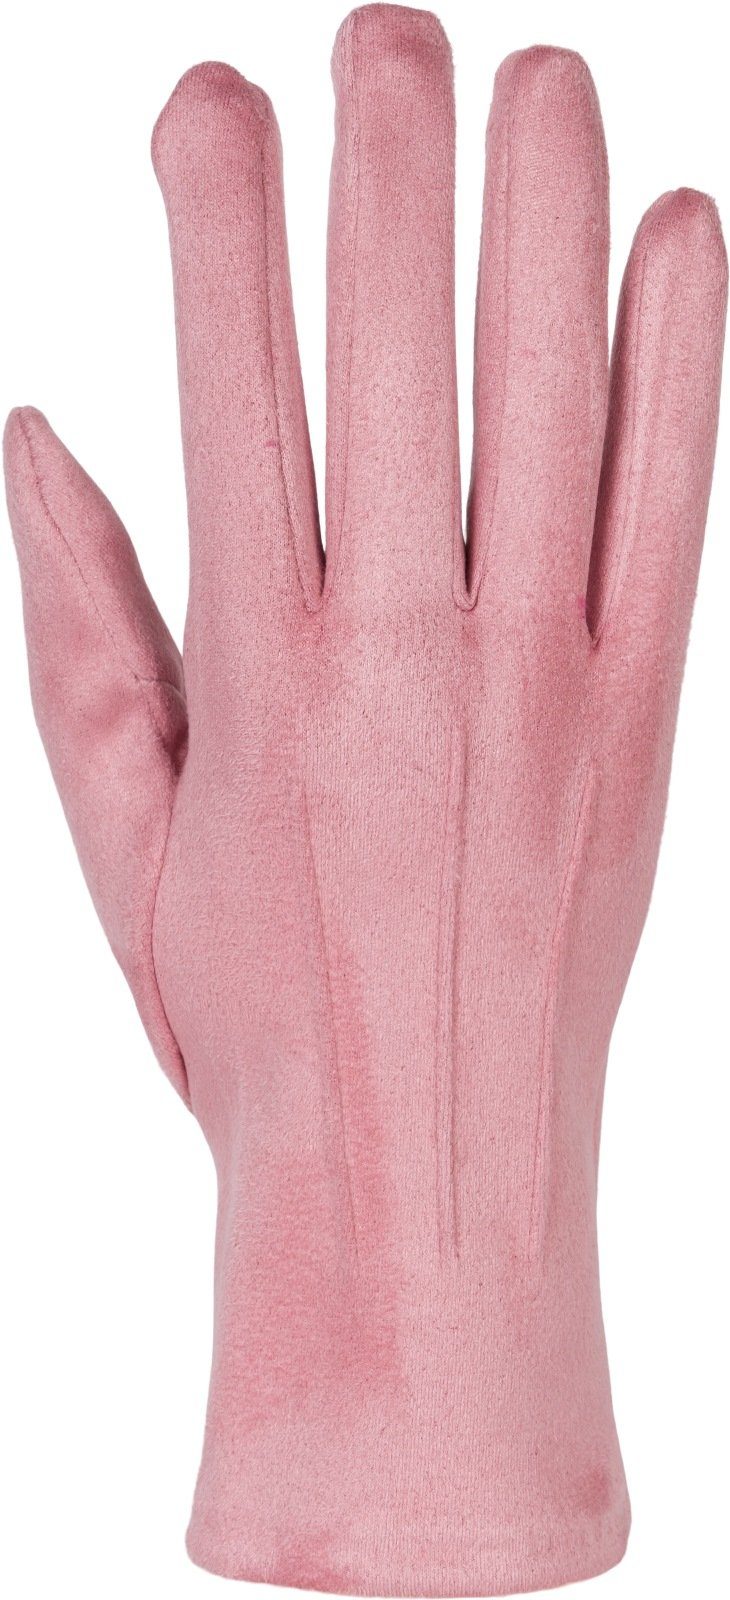 styleBREAKER Fleecehandschuhe Einfarbige Handschuhe Altrose Touchscreen Ziernähte